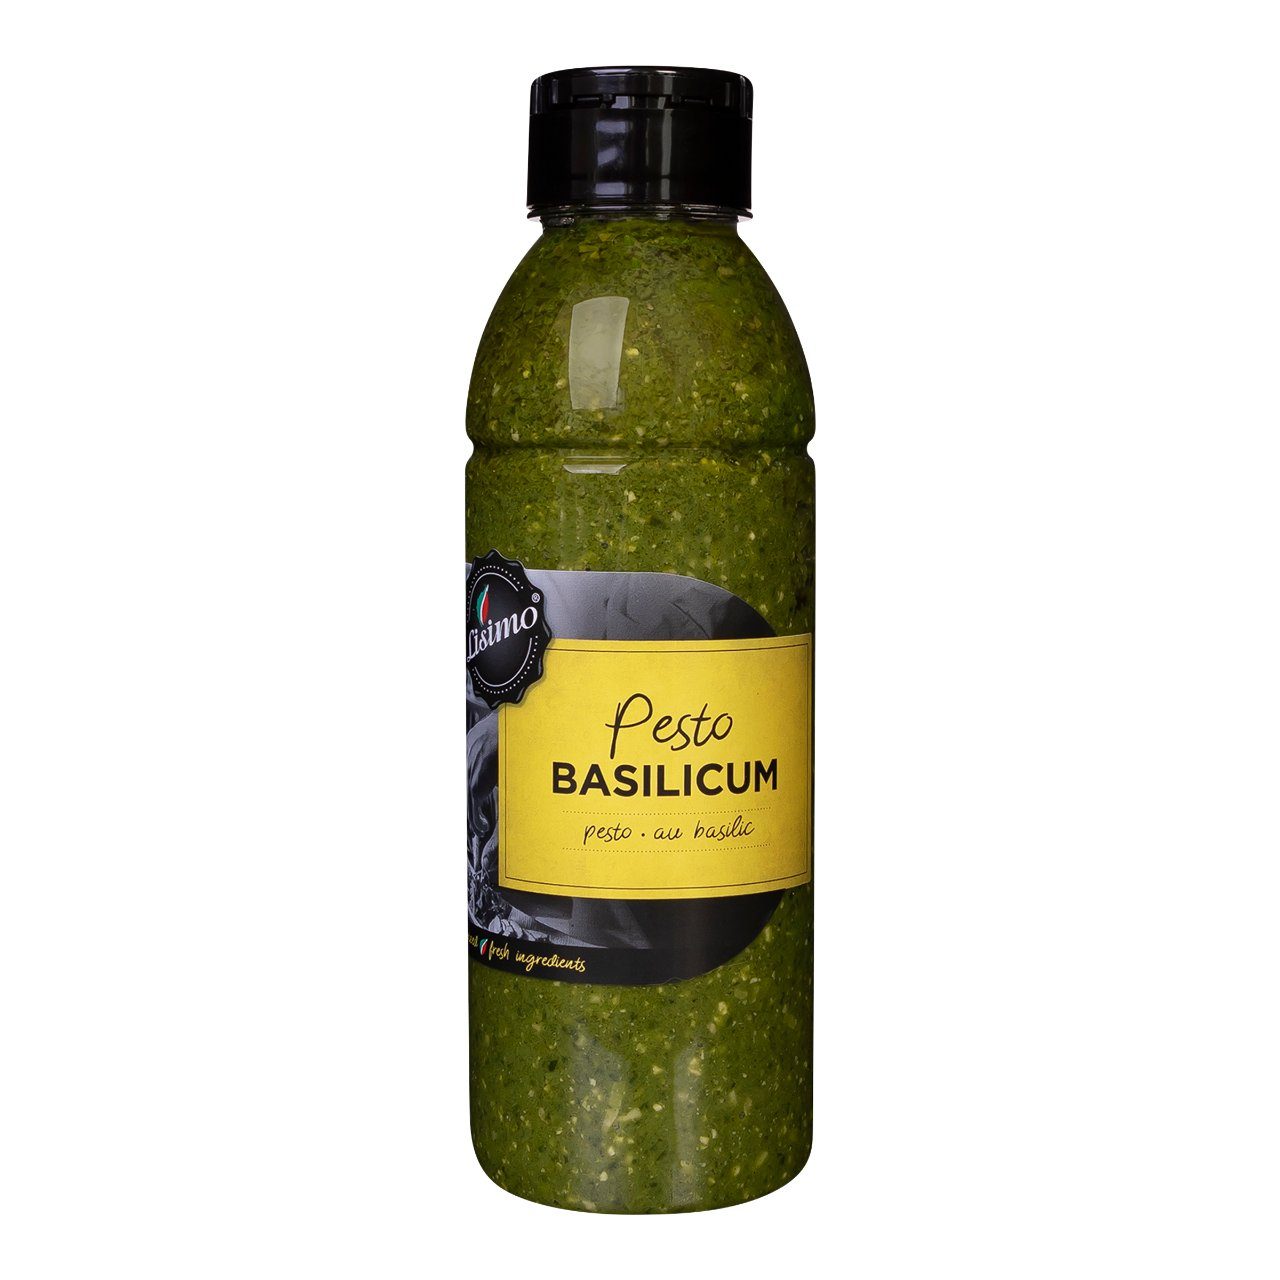 Pesto basilicum